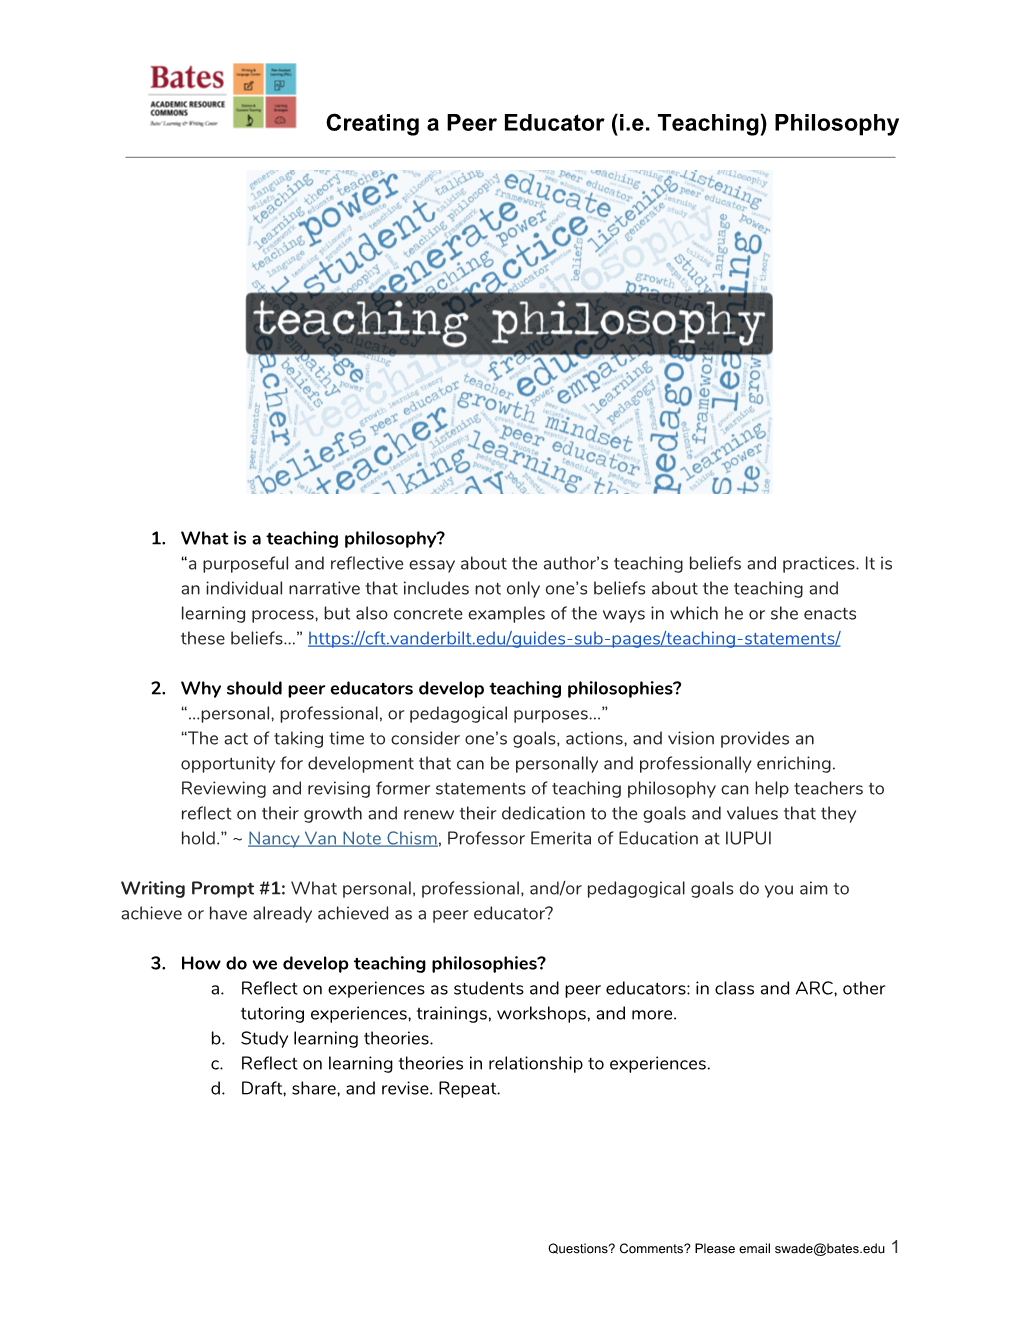 Creating a Peer Educator (I.E. Teaching) Philosophy